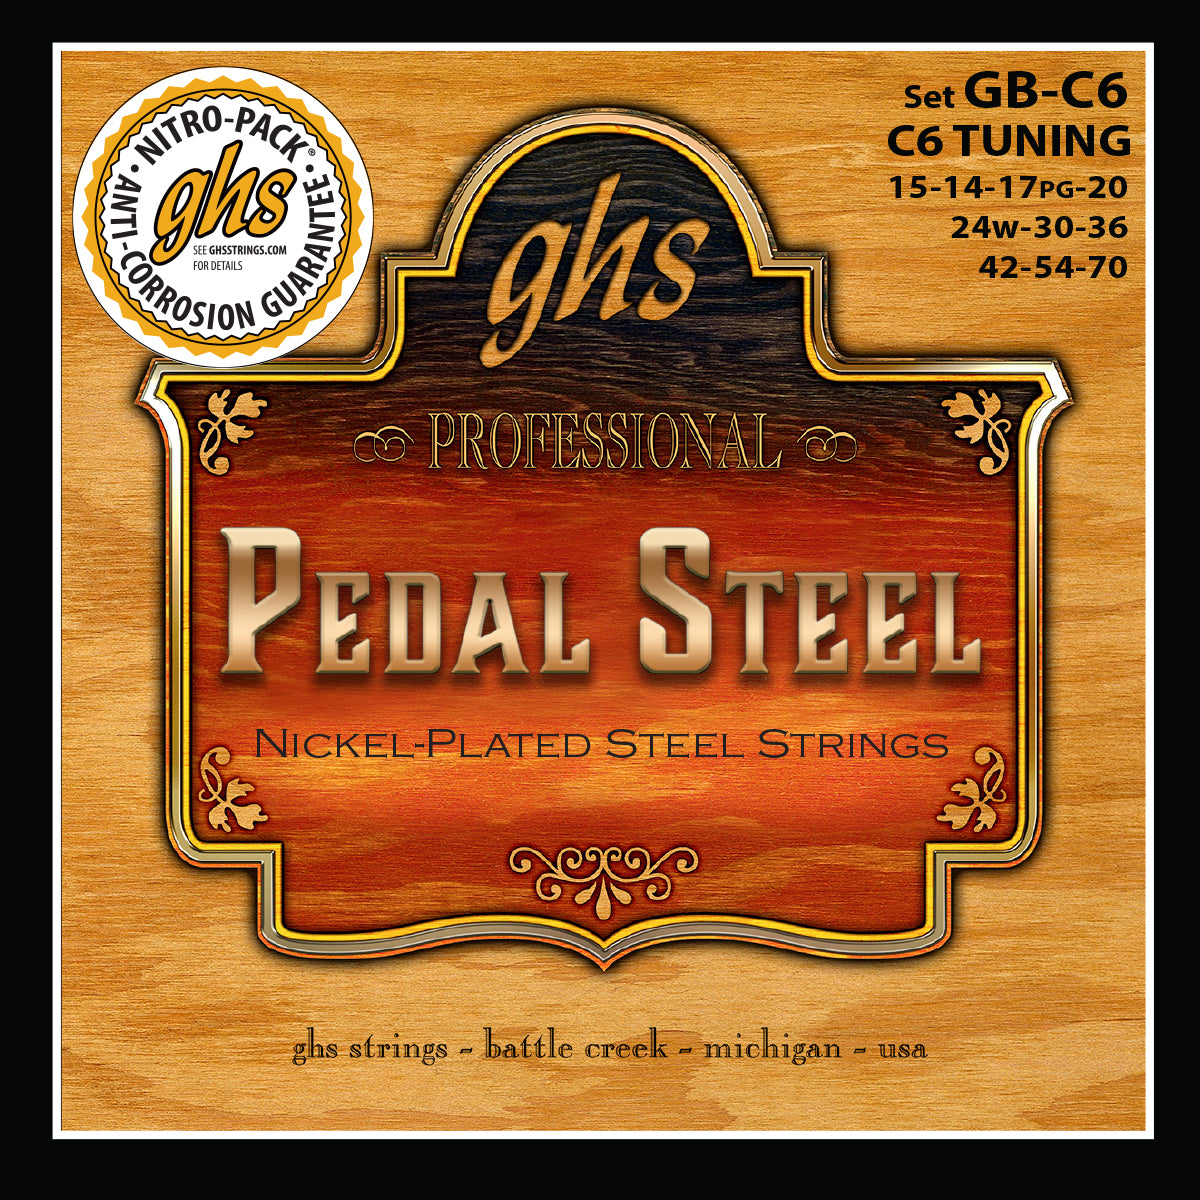 GHS C6th Tuning Pedal Steel Strings